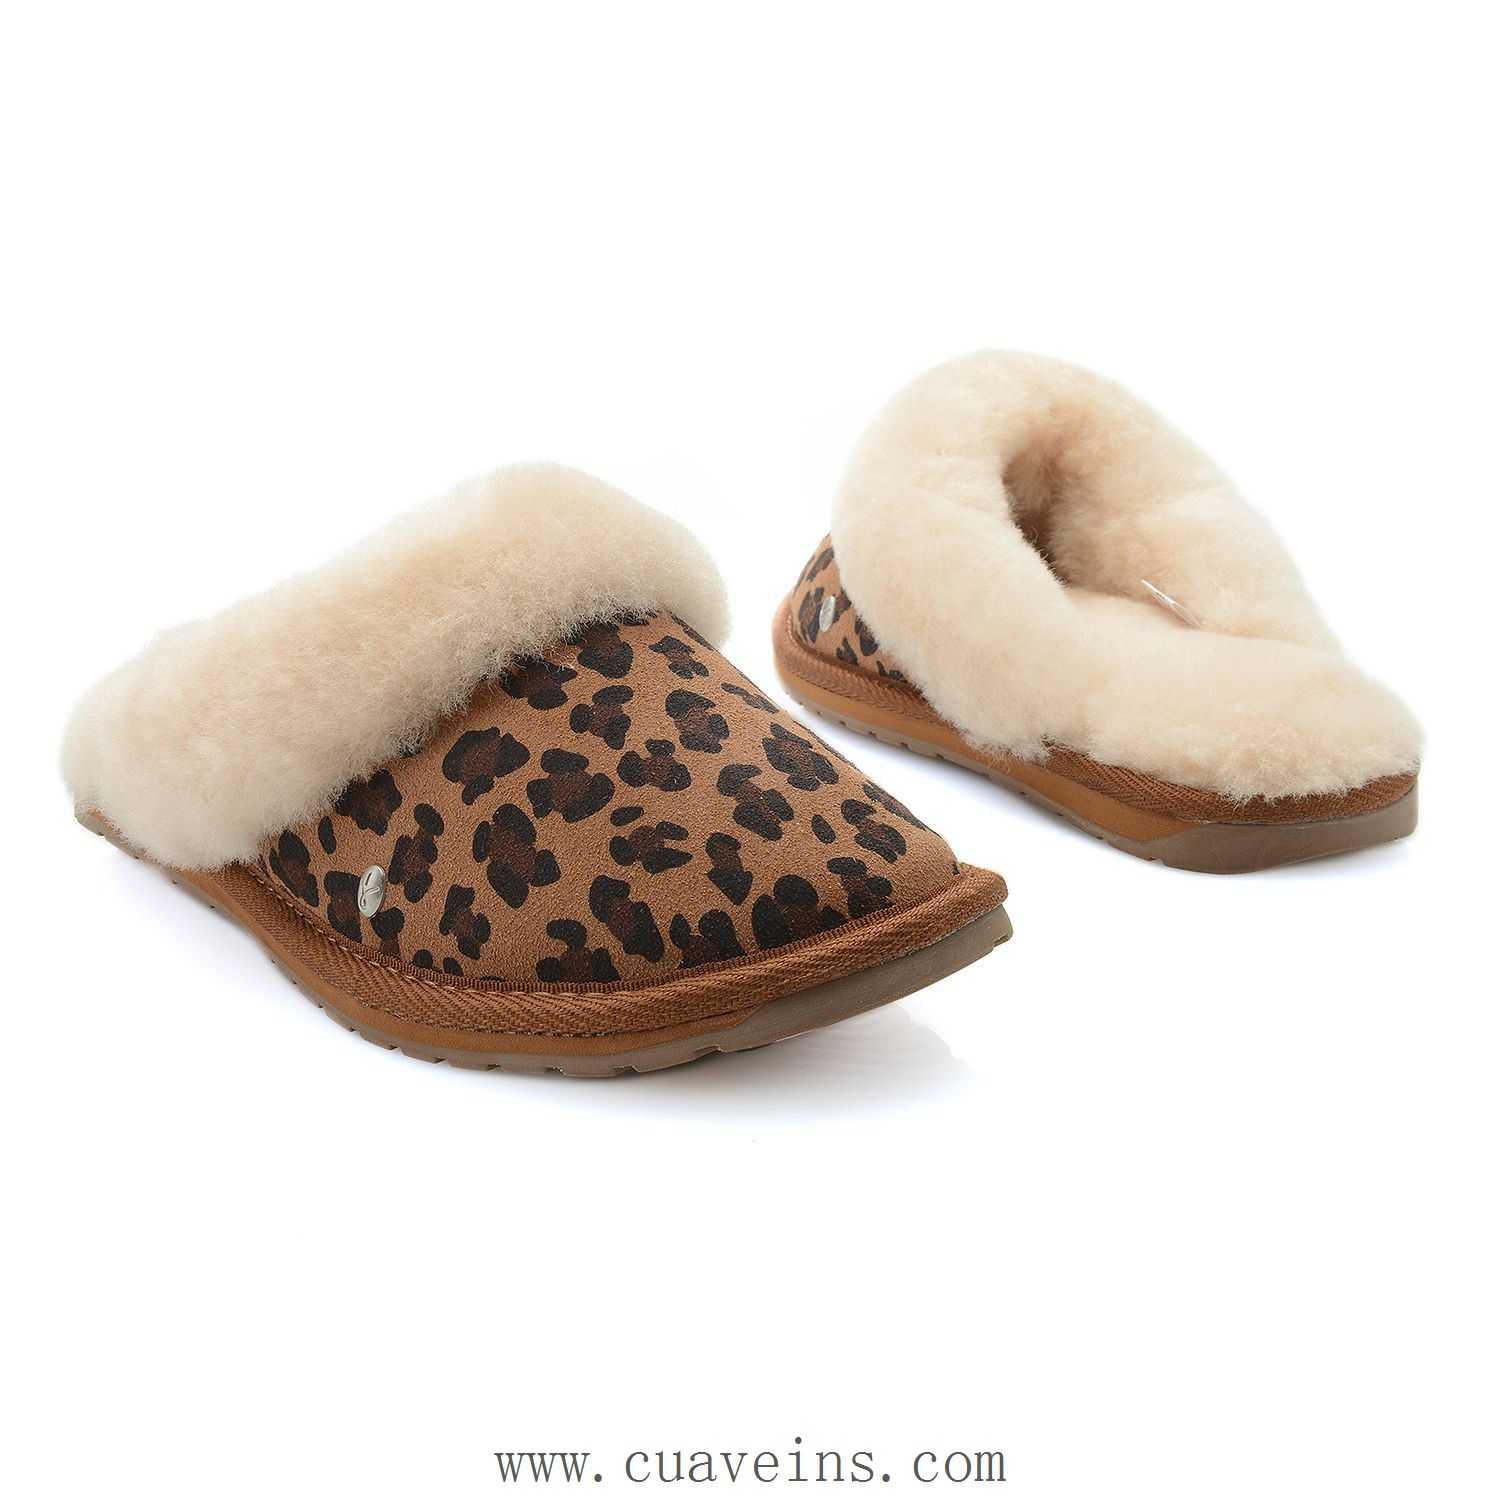 Hot Pink/As Is EMU Jolie Leopard Suede Leather & Sheepskin Slippers ...